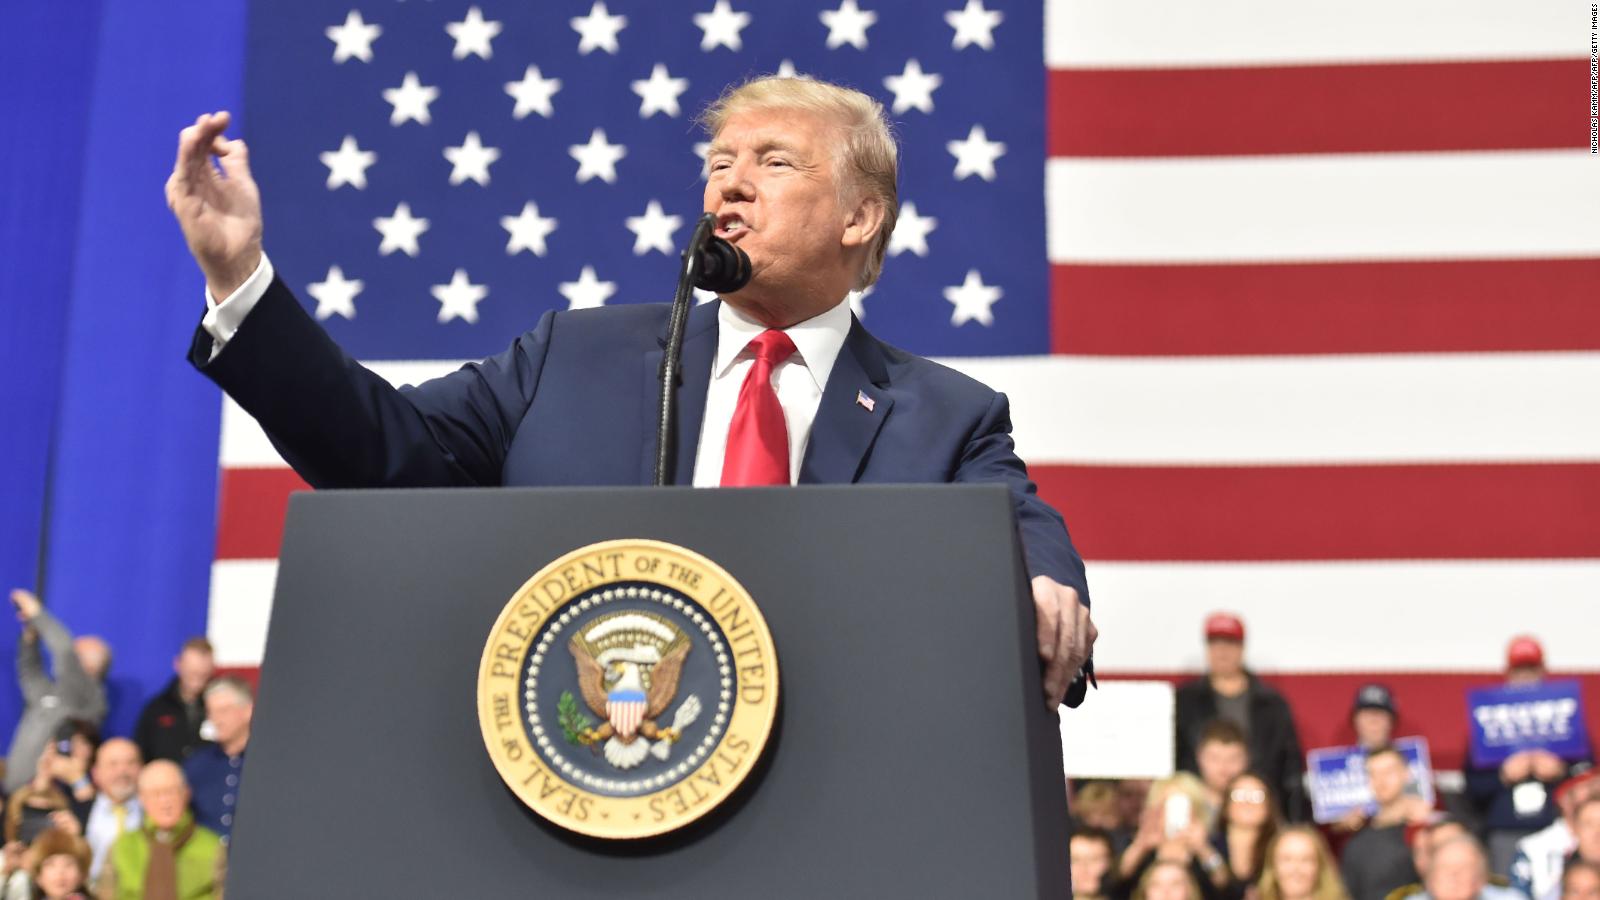 2020 Trump Flag Keep America Great Again Donald For USA President 